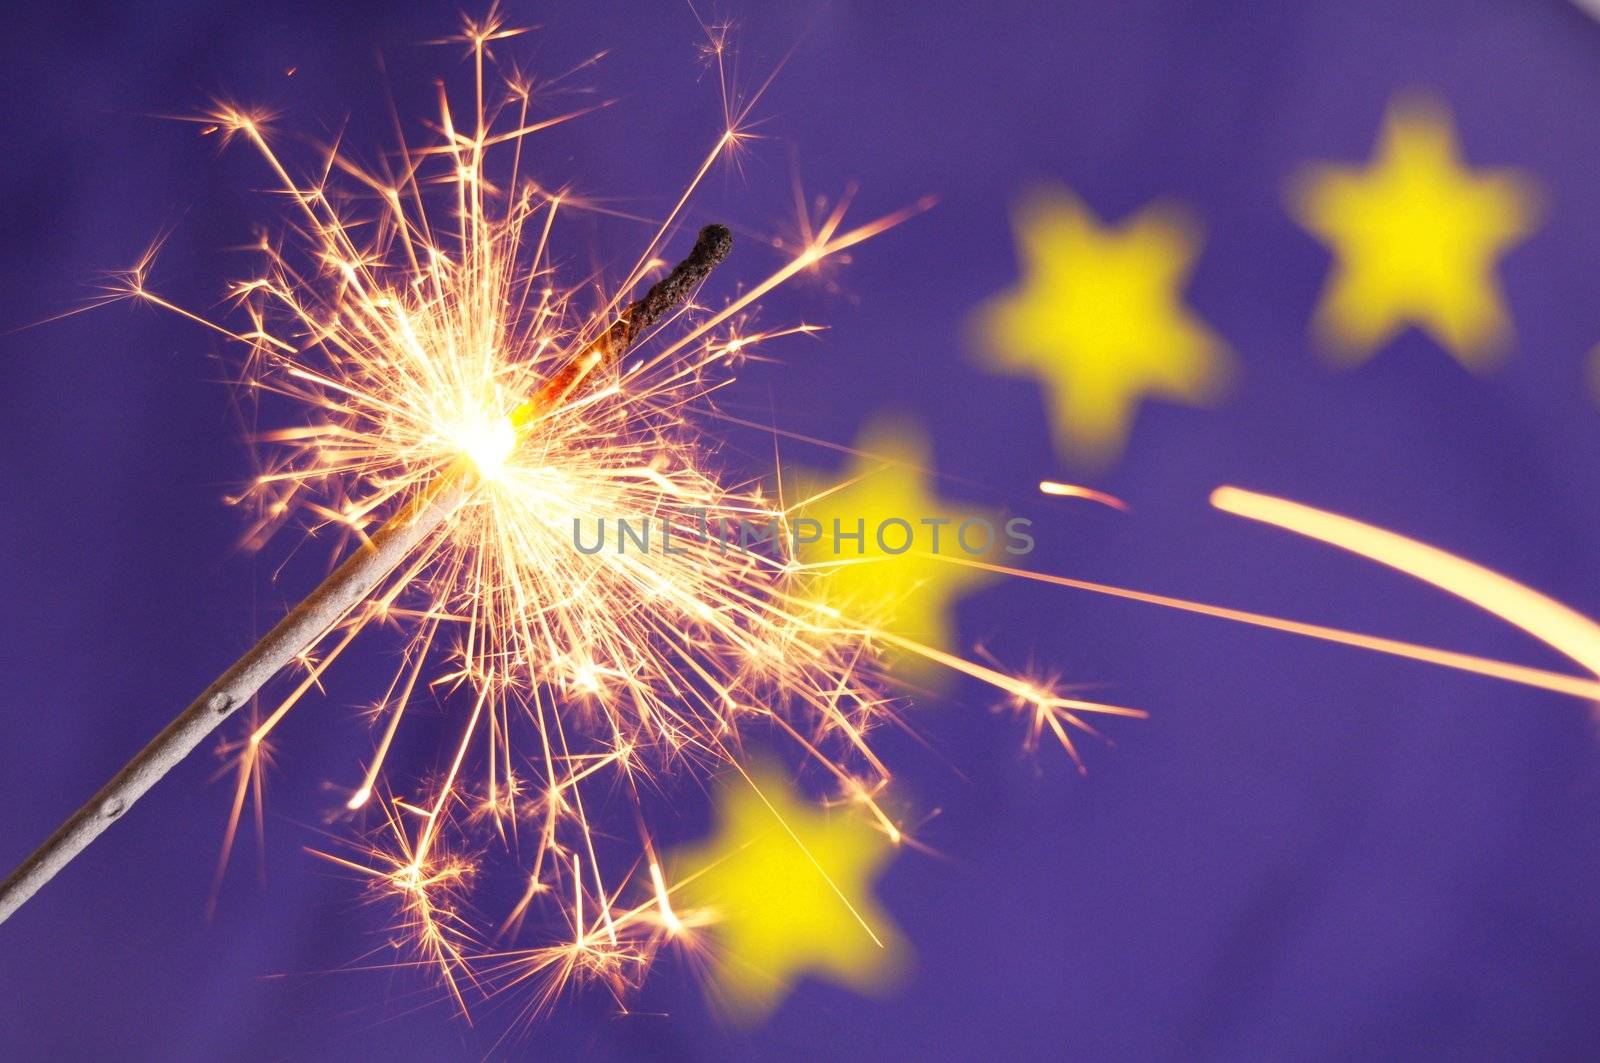 eu or european union flag with sparkler showing celebration concept